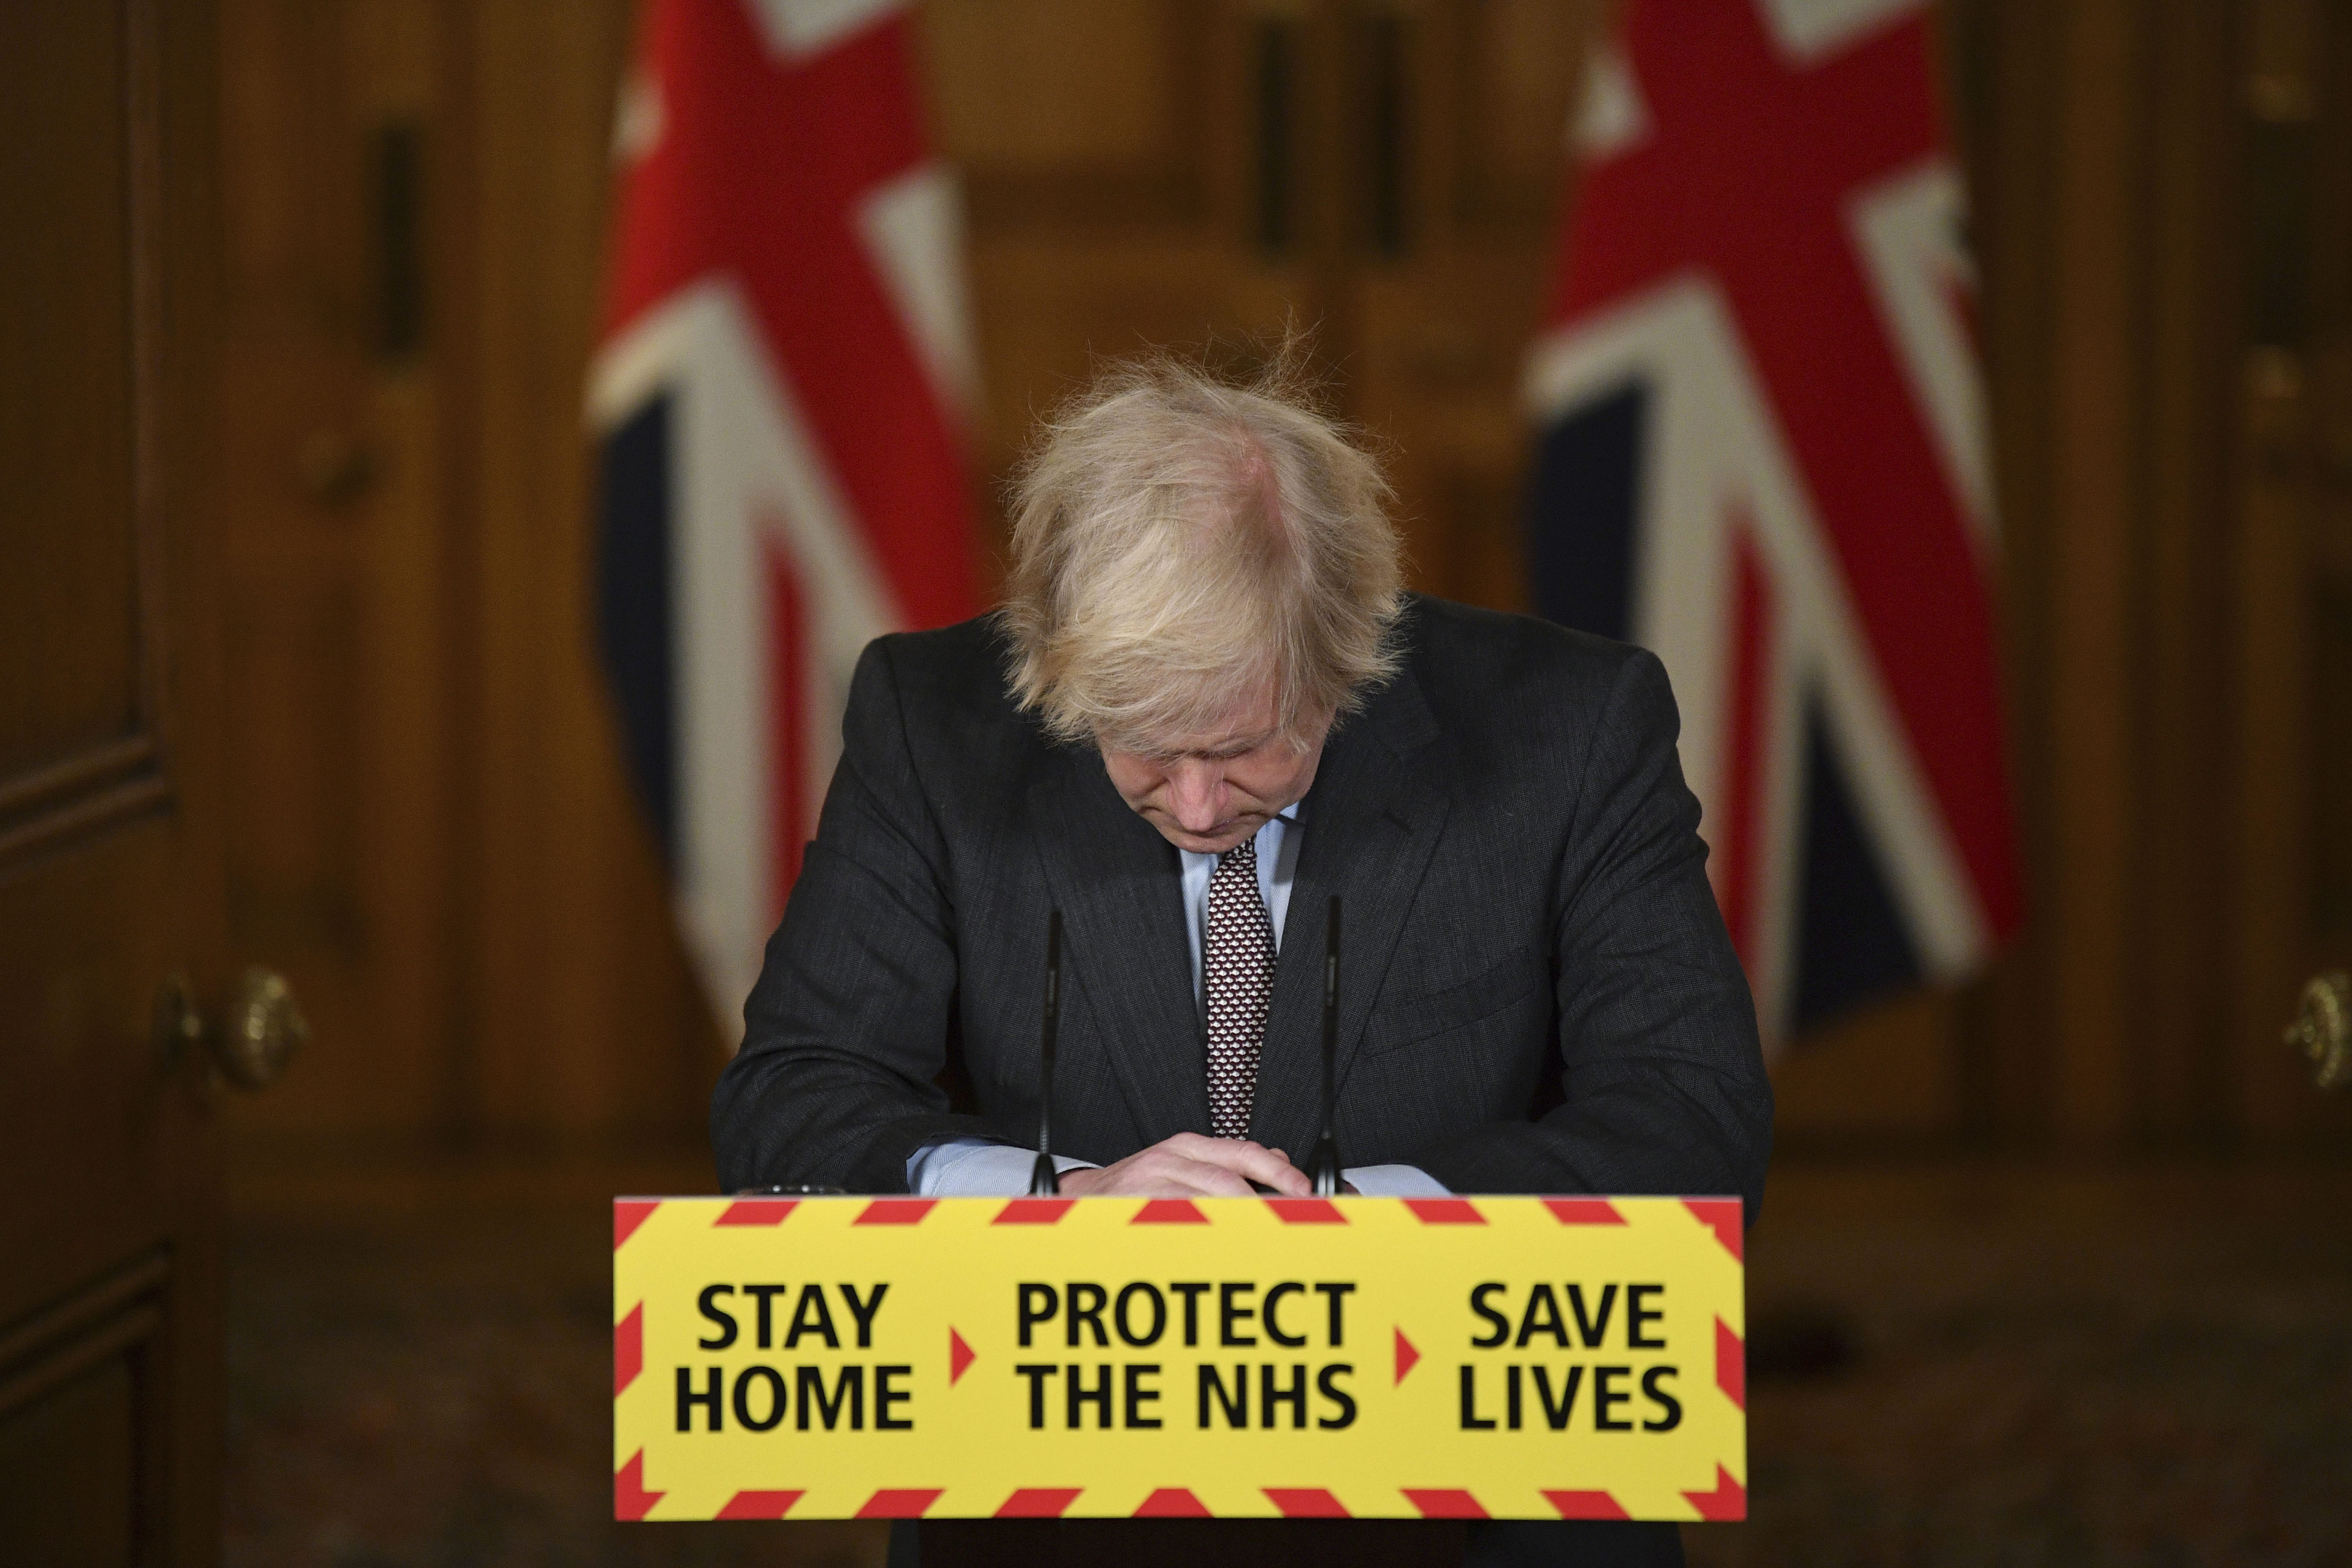 Boris Johnson, then Britain’s prime minister, during the Covid-19 pandemic in 2021. Photo: via AP